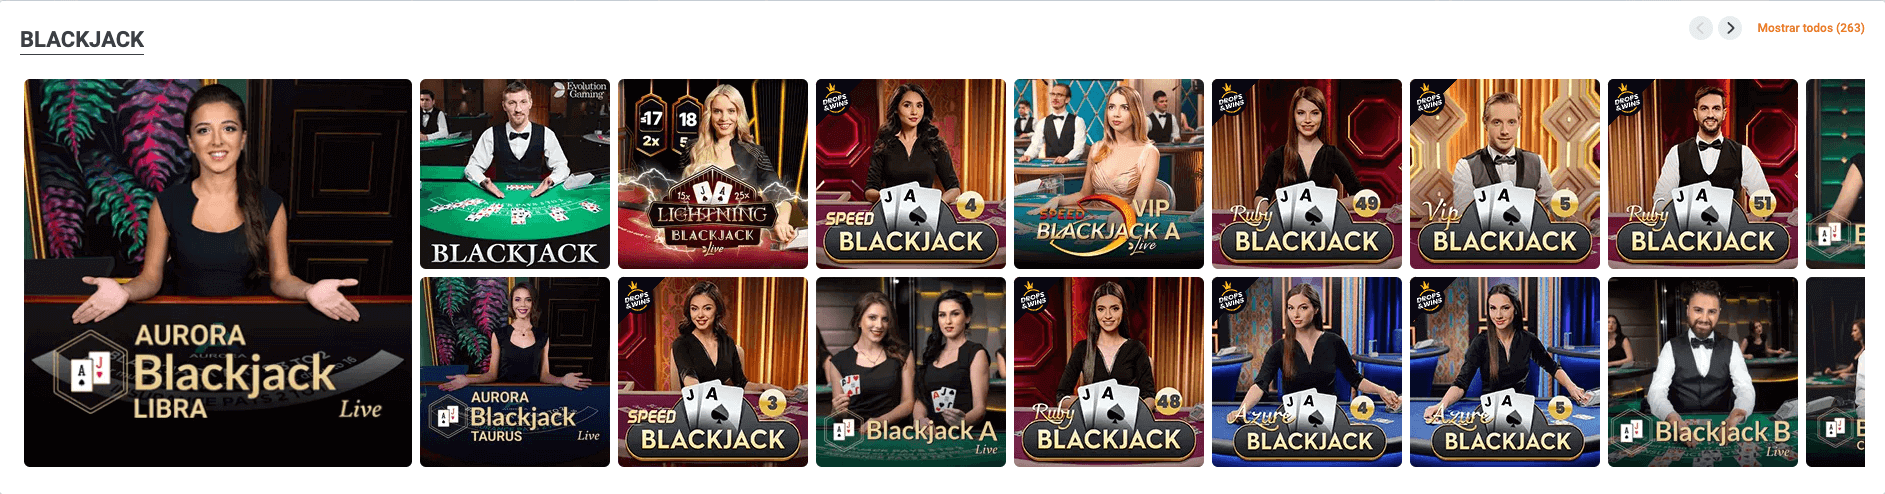 Blackjack TonyBet casino